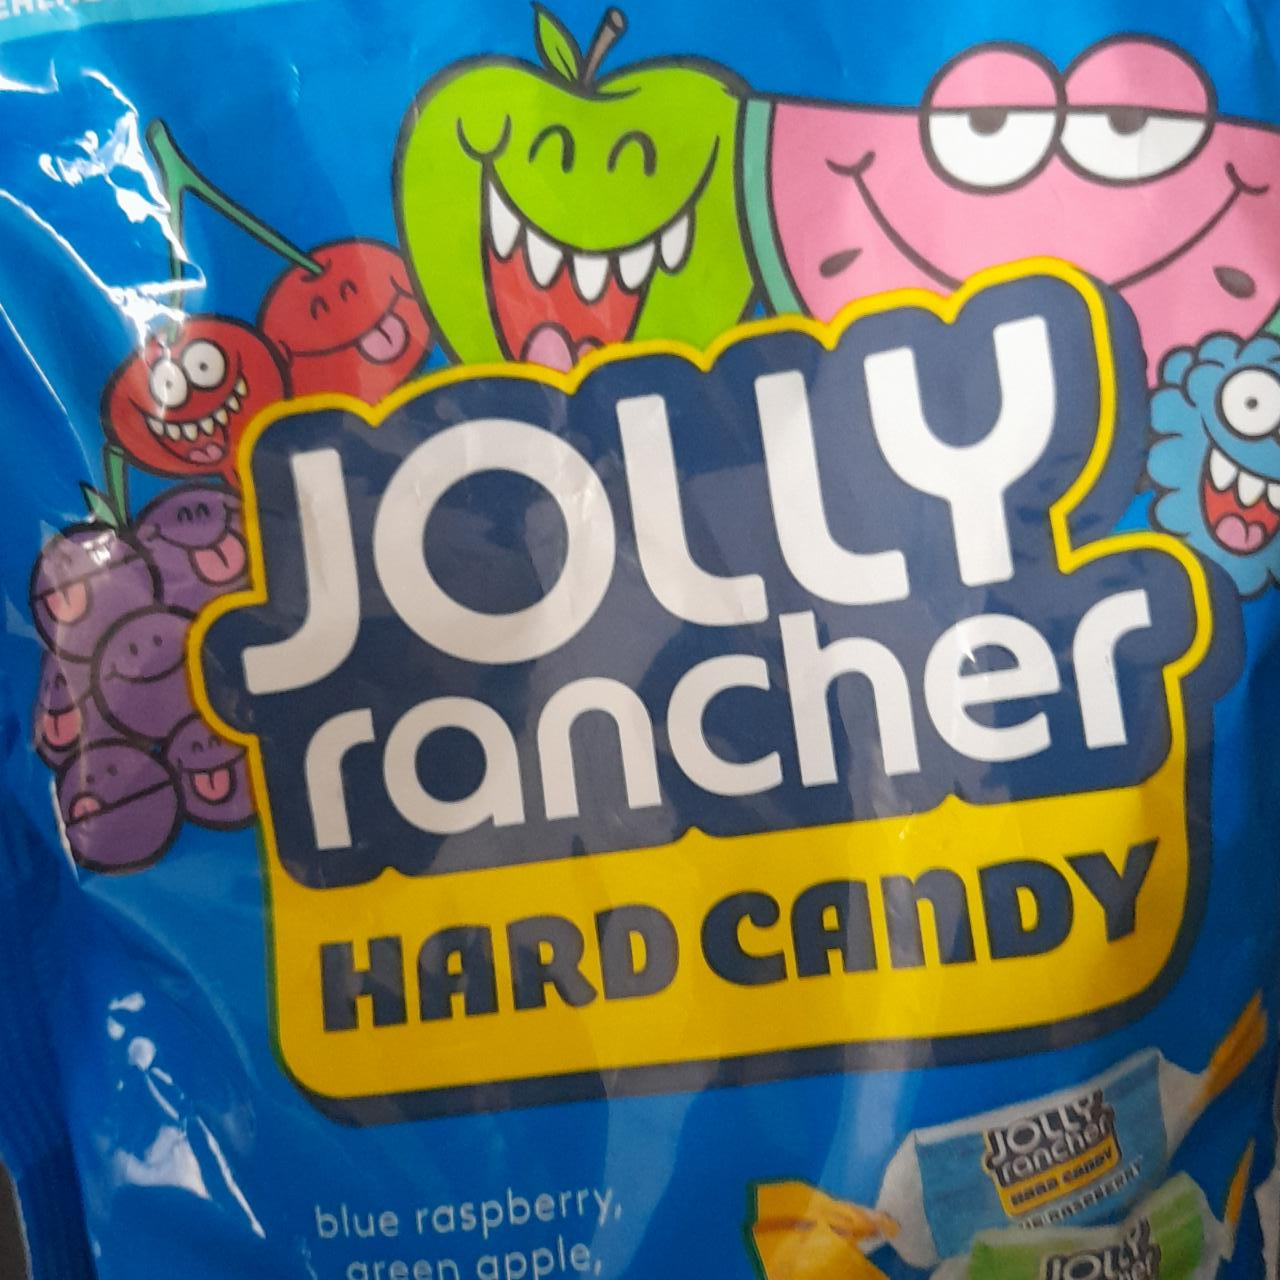 Zdjęcia - Jolly rancher Hard candy